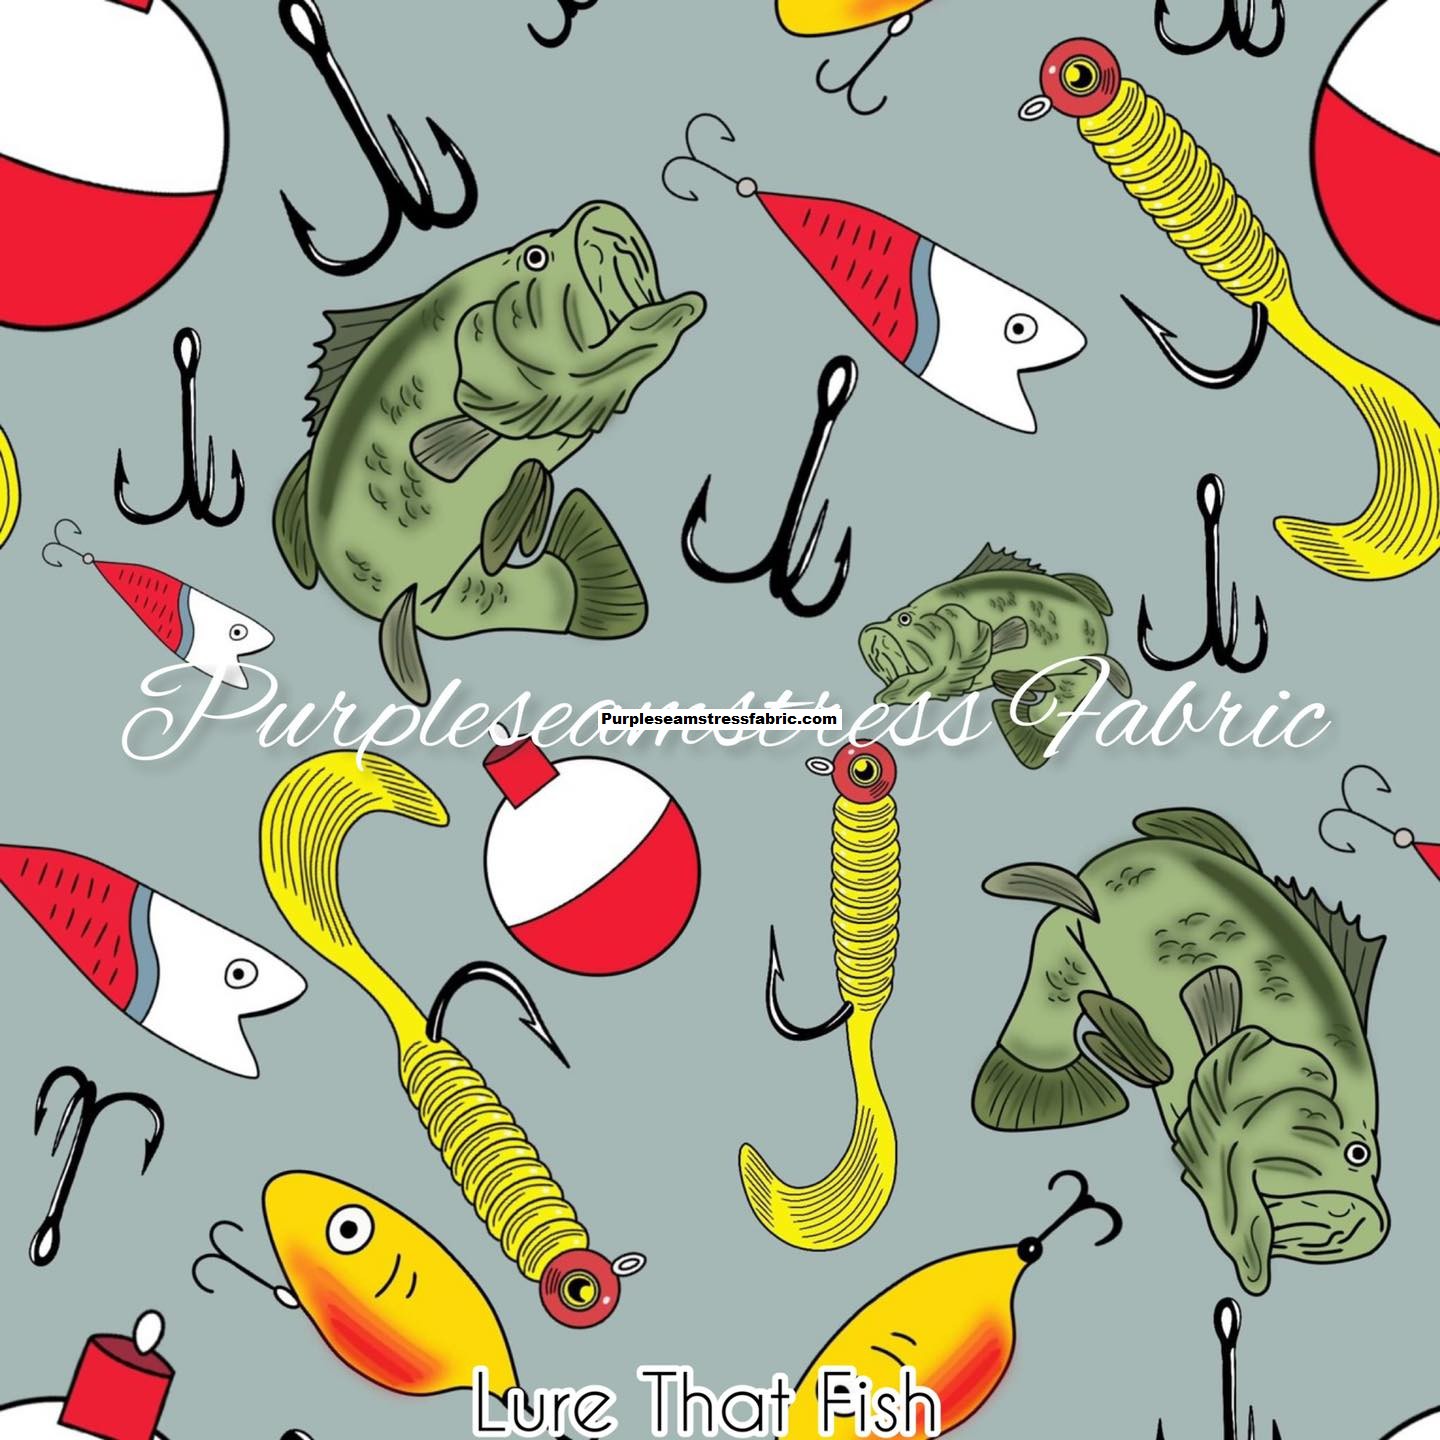 Lure That Fish – Purpleseamstress Fabric